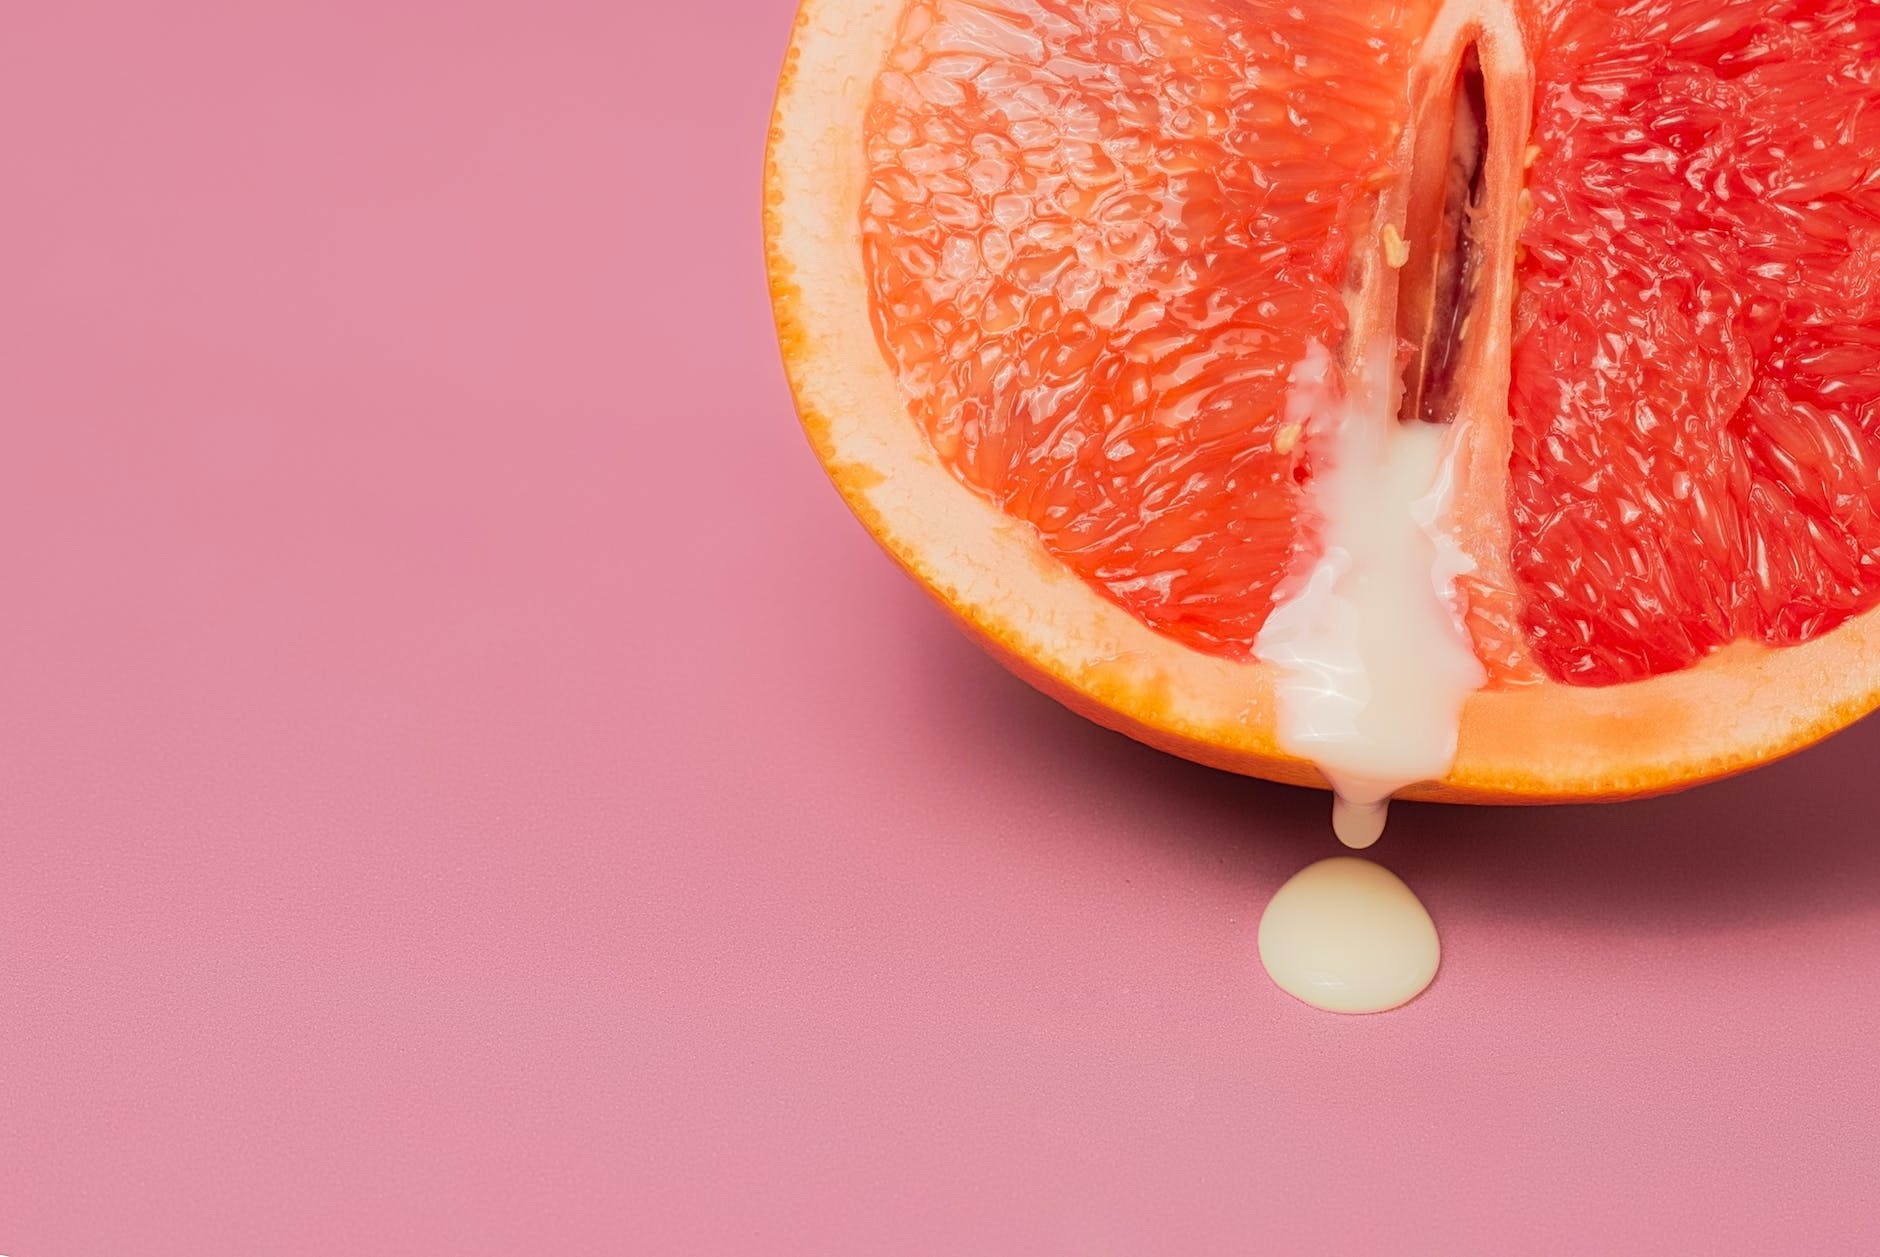 body art: grapefruit in shape of vagina with sperm cut